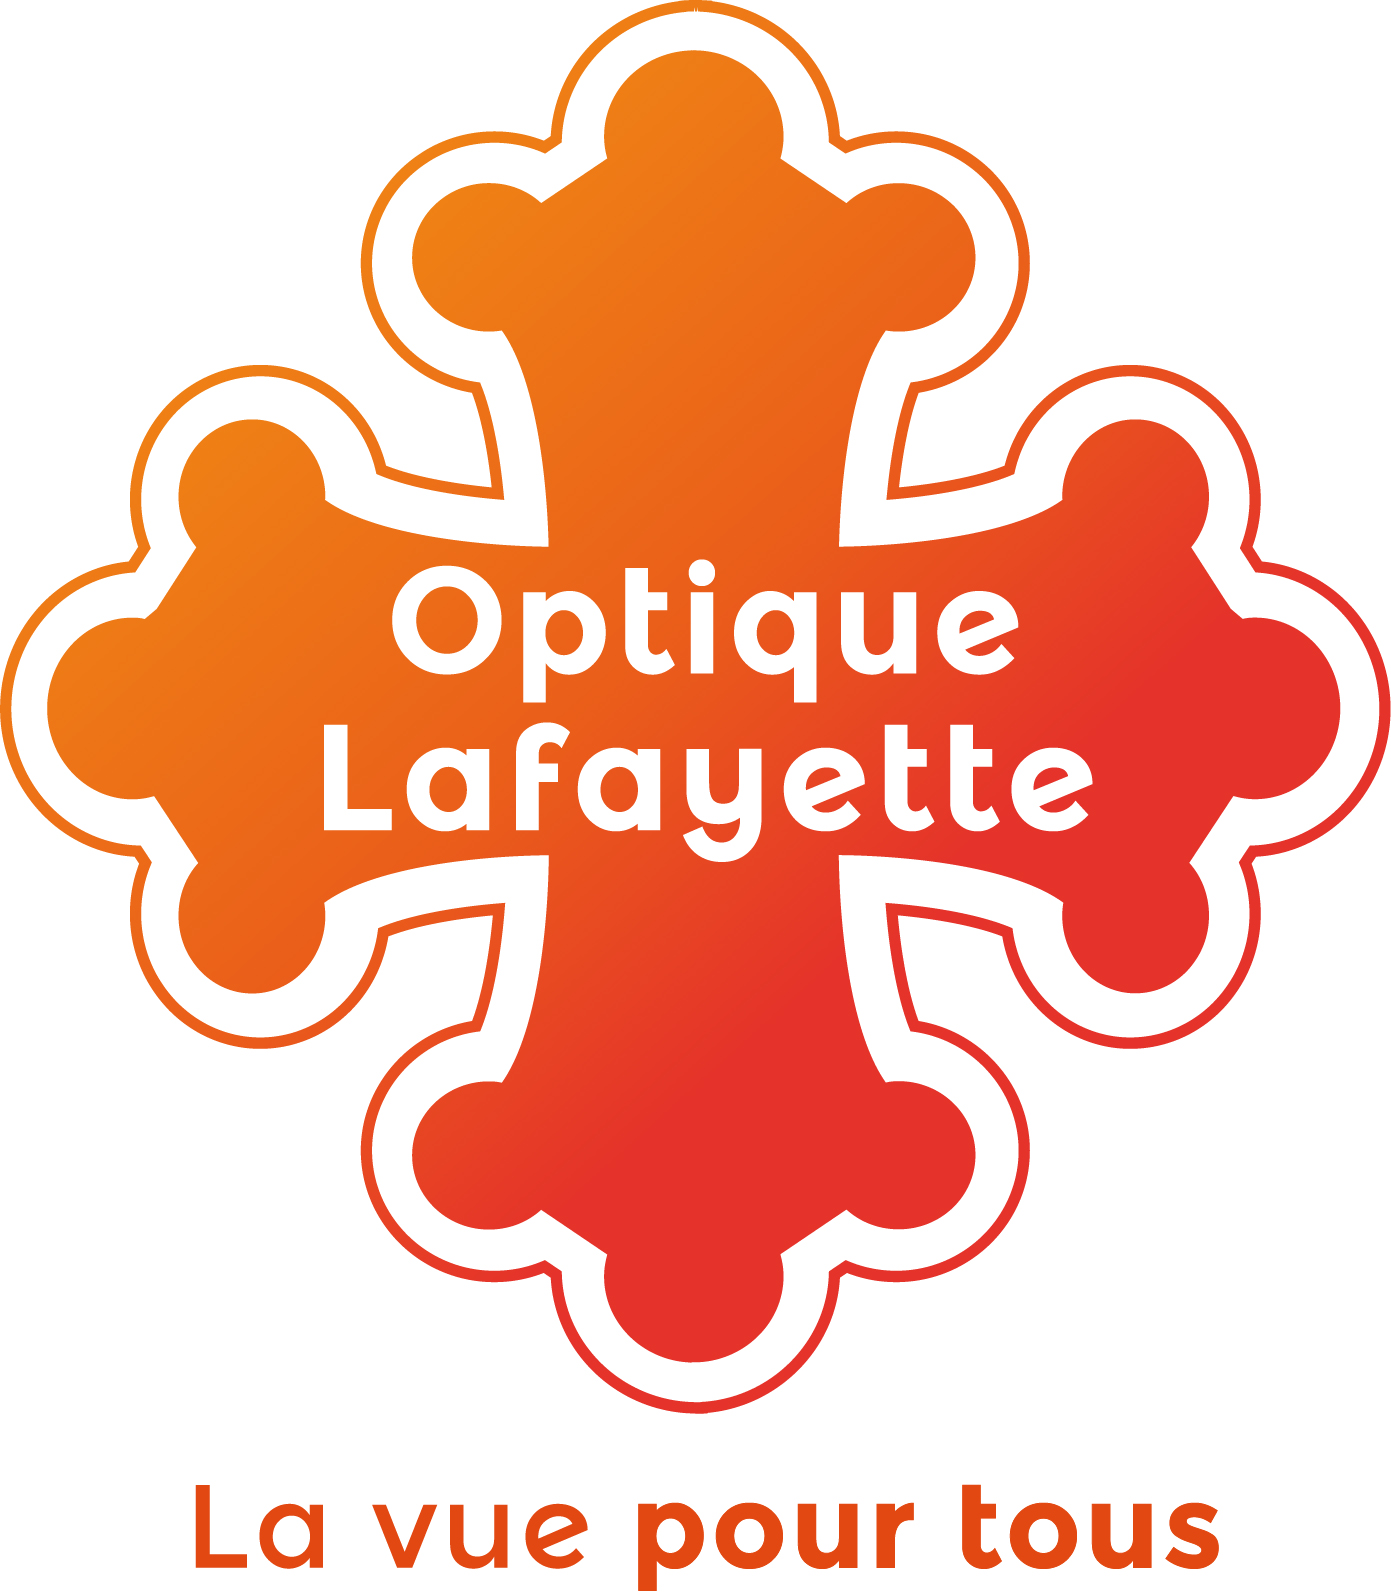 Optique Lafayette Angers